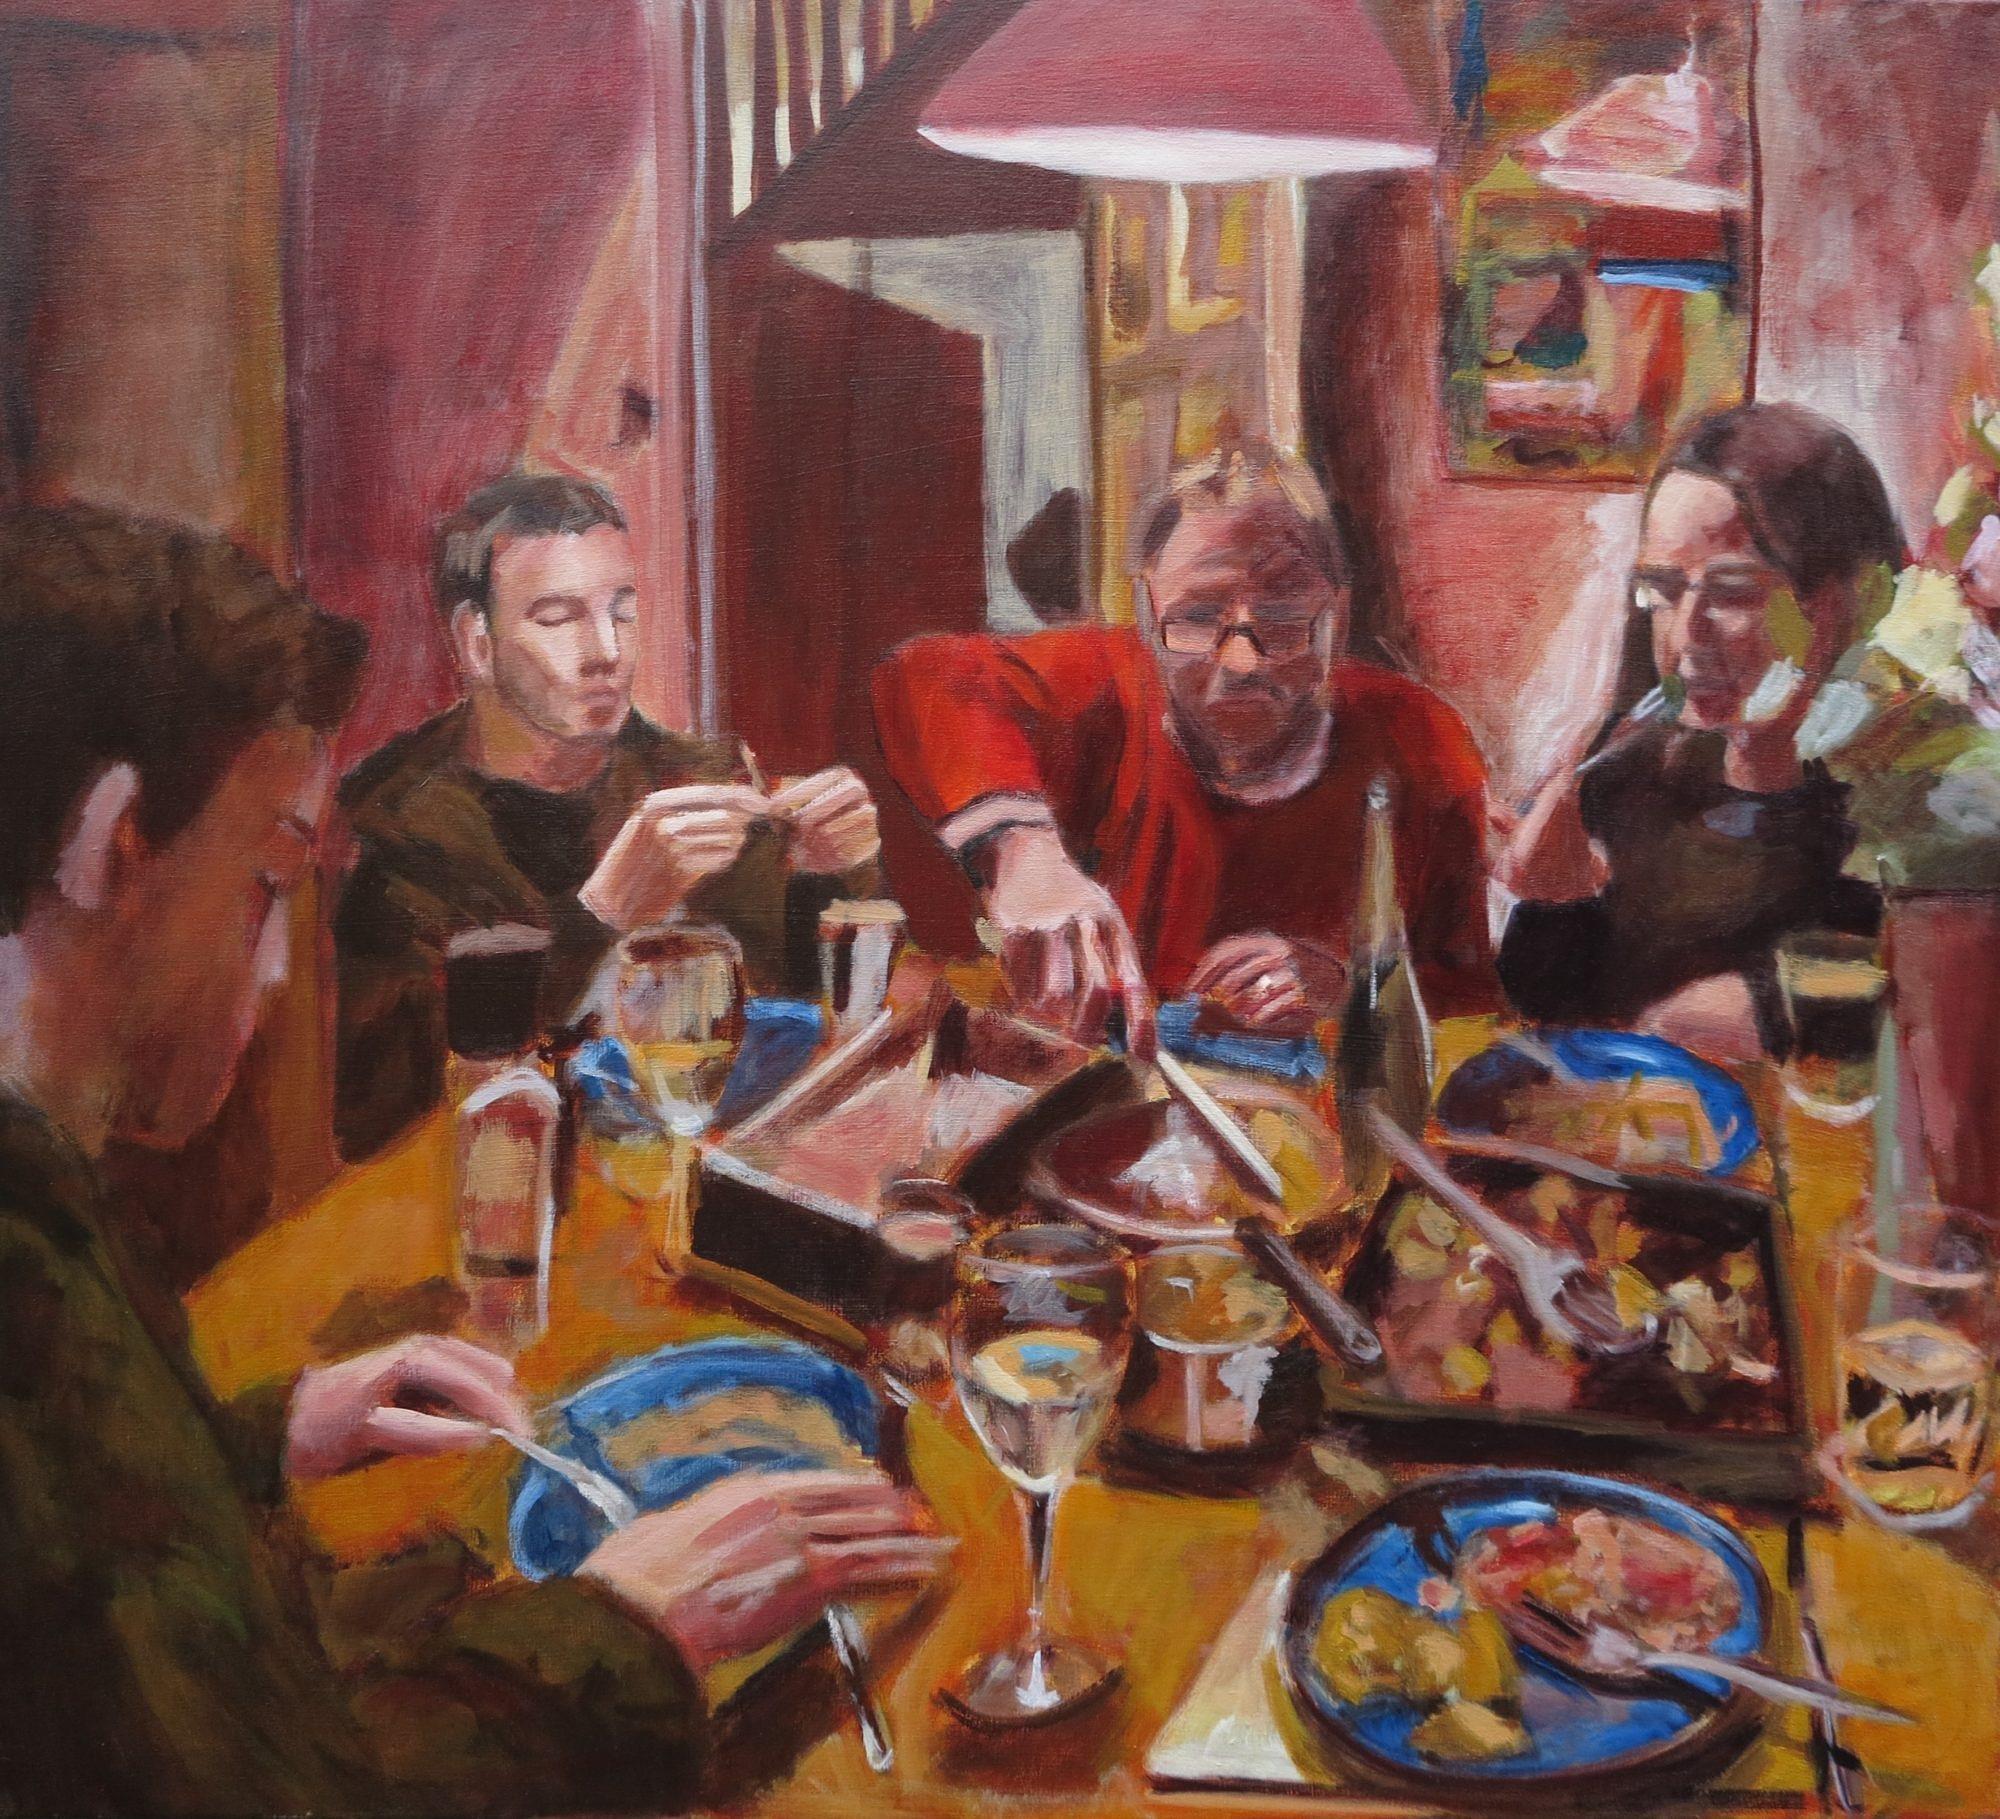 Ewan White Figurative Painting - Family Eating